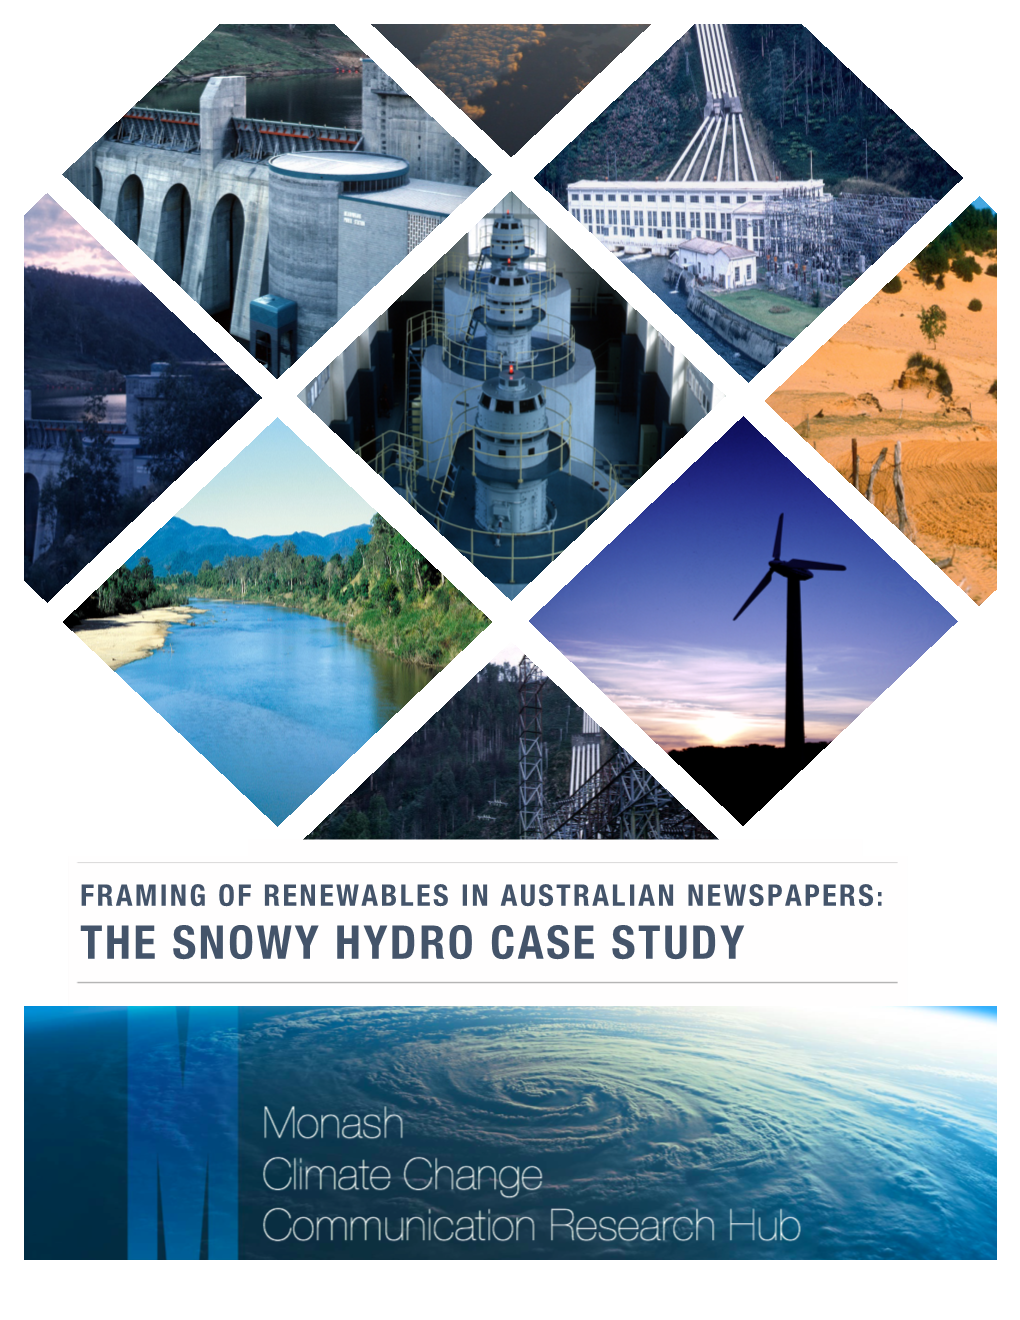 The Snowy Hydro Case Study